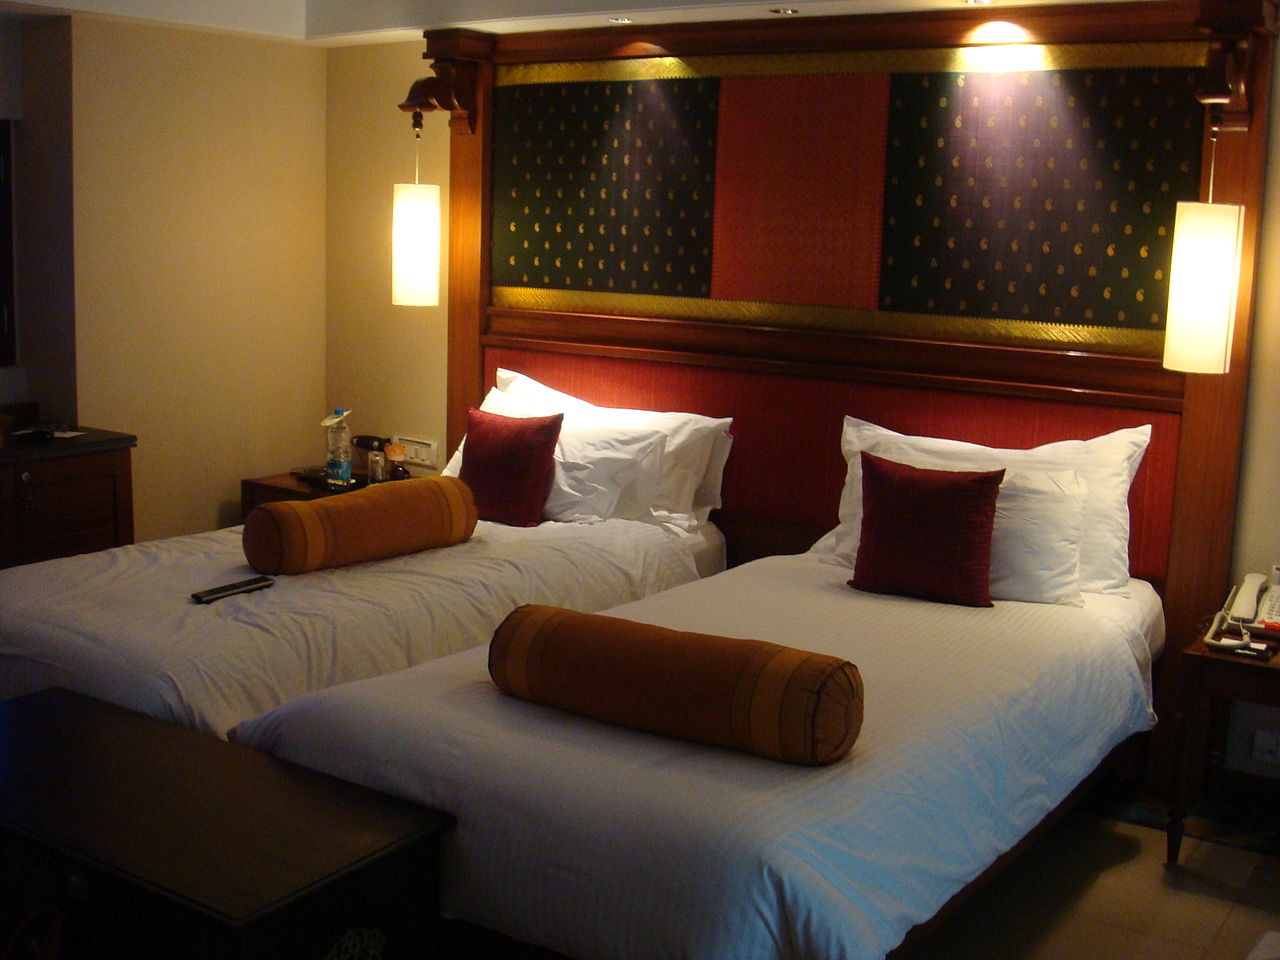 1280px-Hotel_room_beds_at_GRT_Temple_Bay_Resorts,_Mahabalipuram